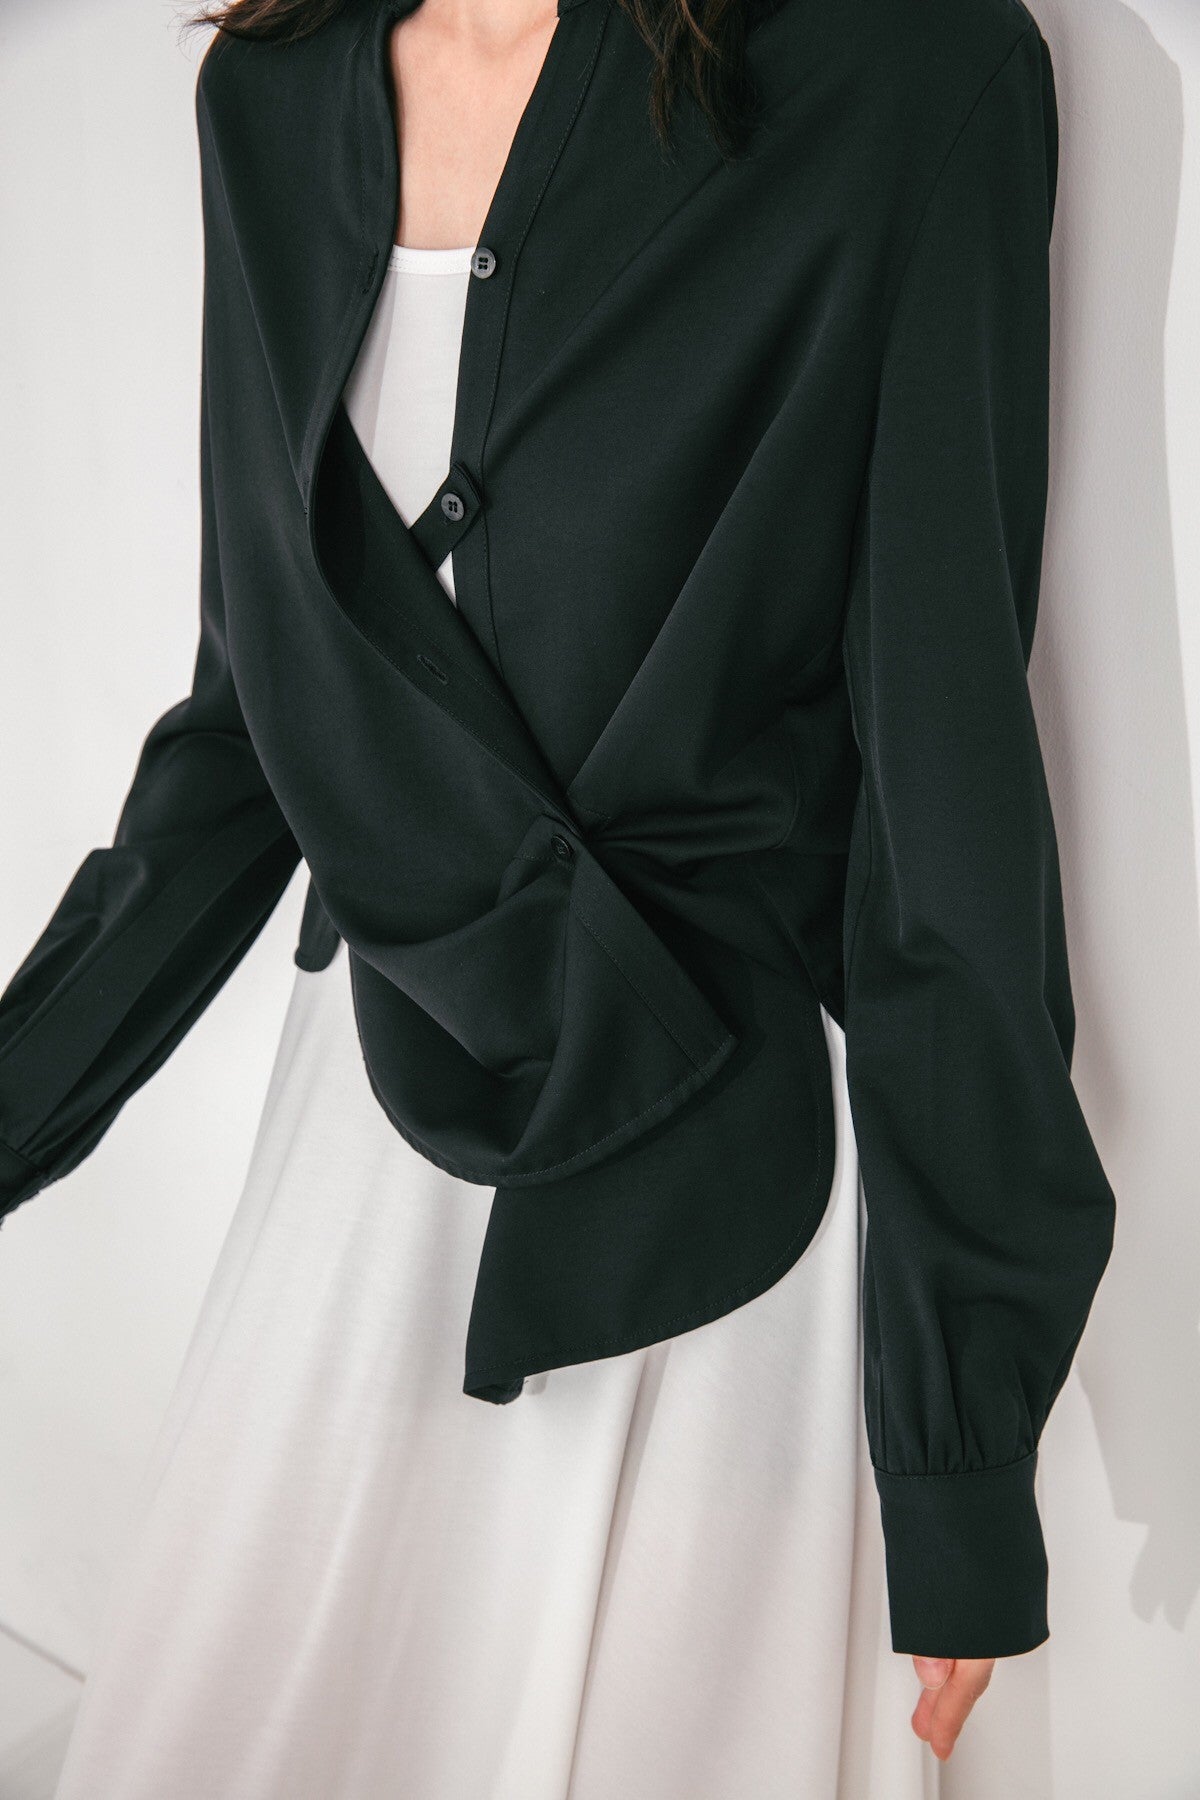 SKYE San Francisco SF shop ethical modern minimalist quality women clothing fashion Eléonore Blouse black